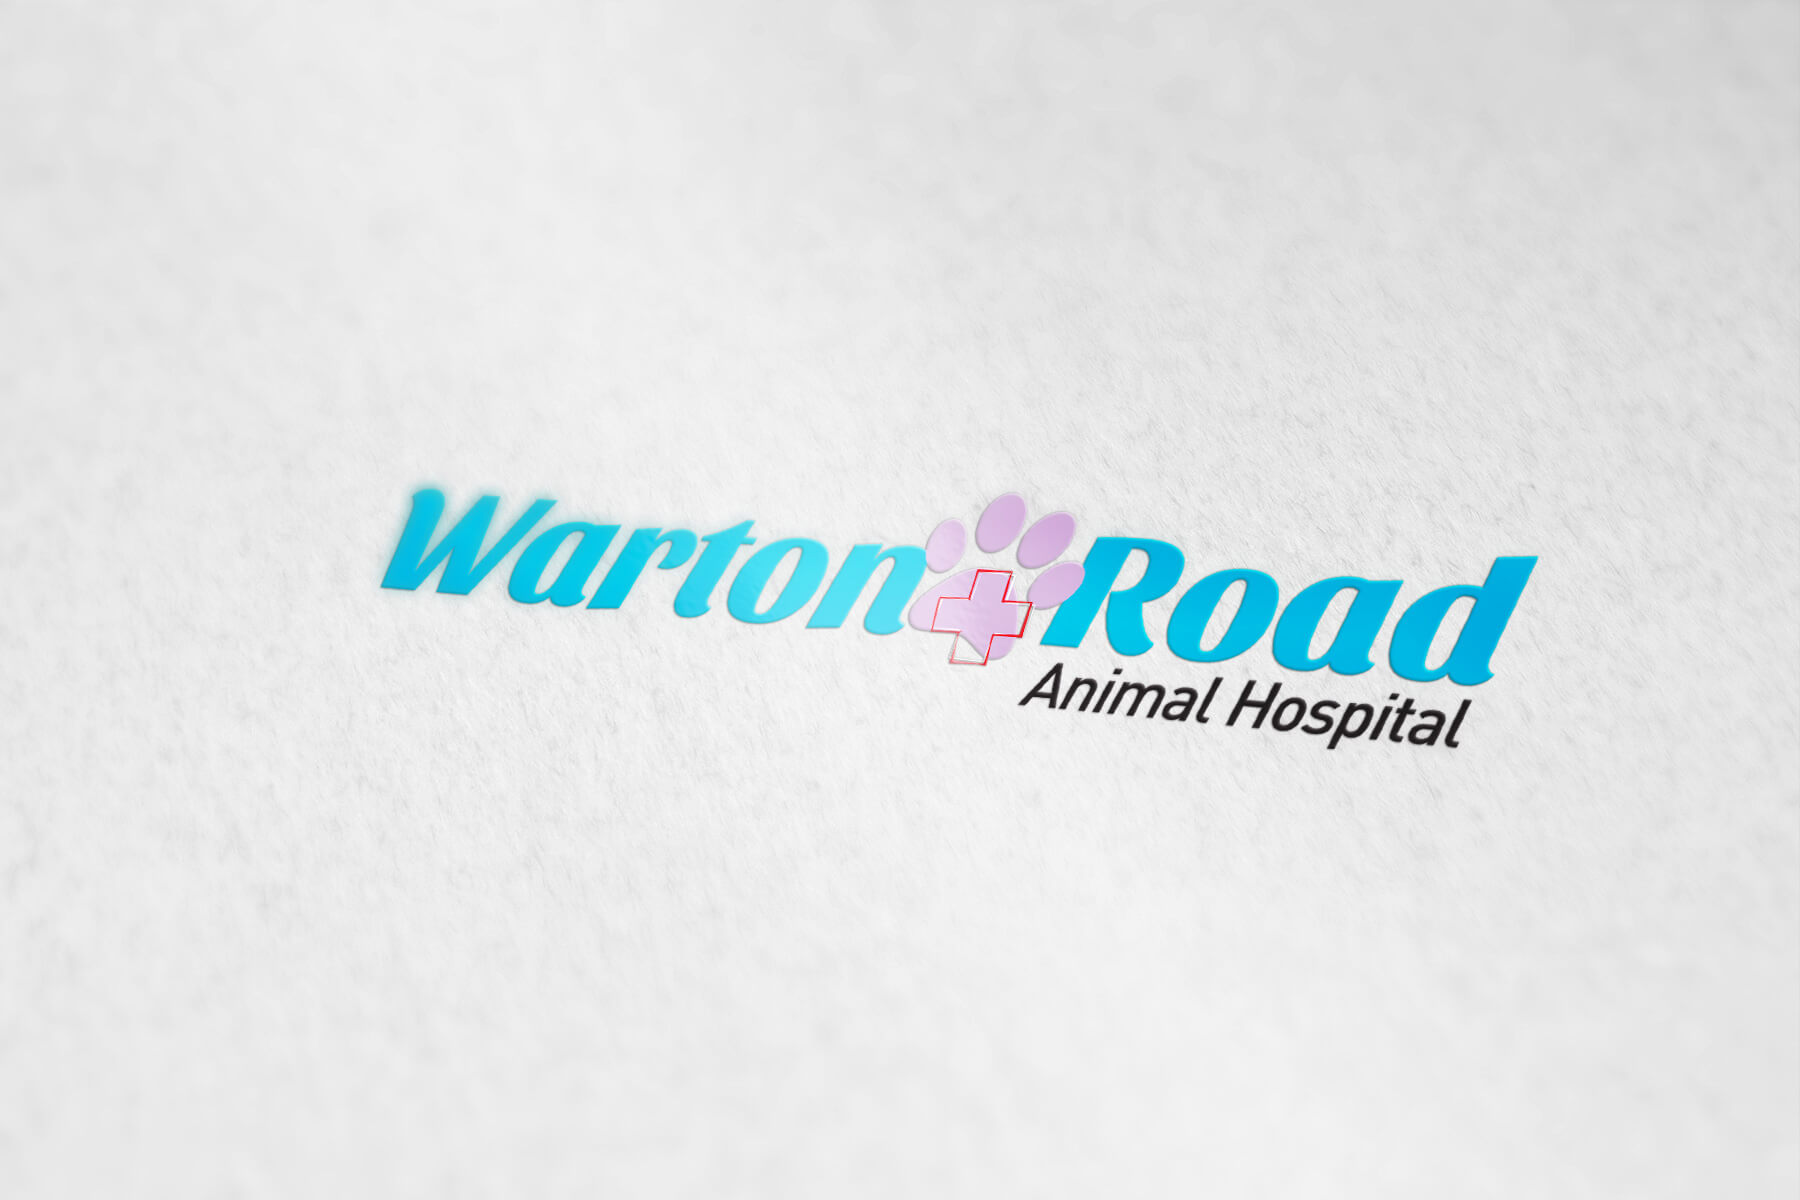 Warton Road Vet Animal Hospital - Designs by CR8VE designs Perth